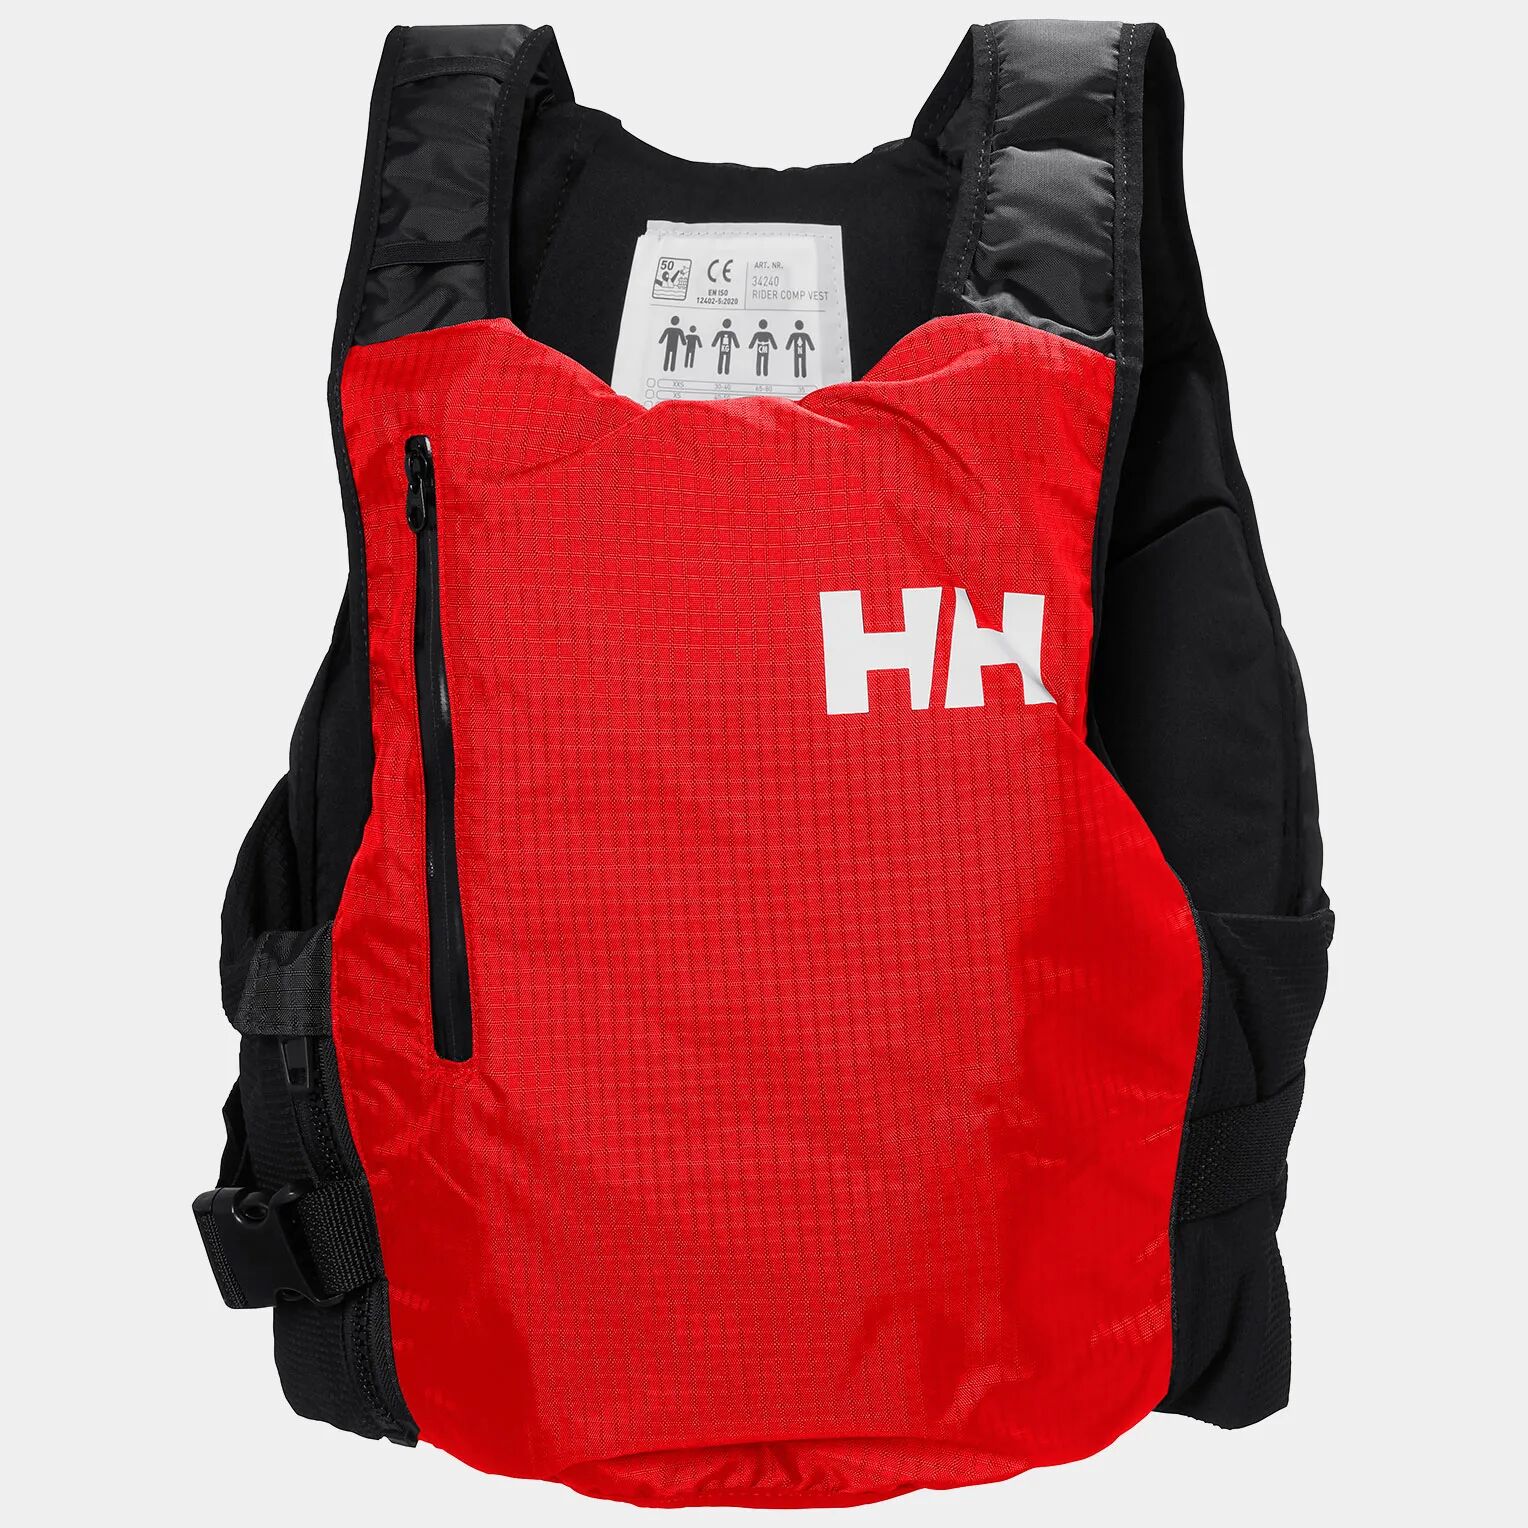 Helly Hansen Rider Foil Race Life Jacket Red 70/90+KG - Alert Red - Unisex